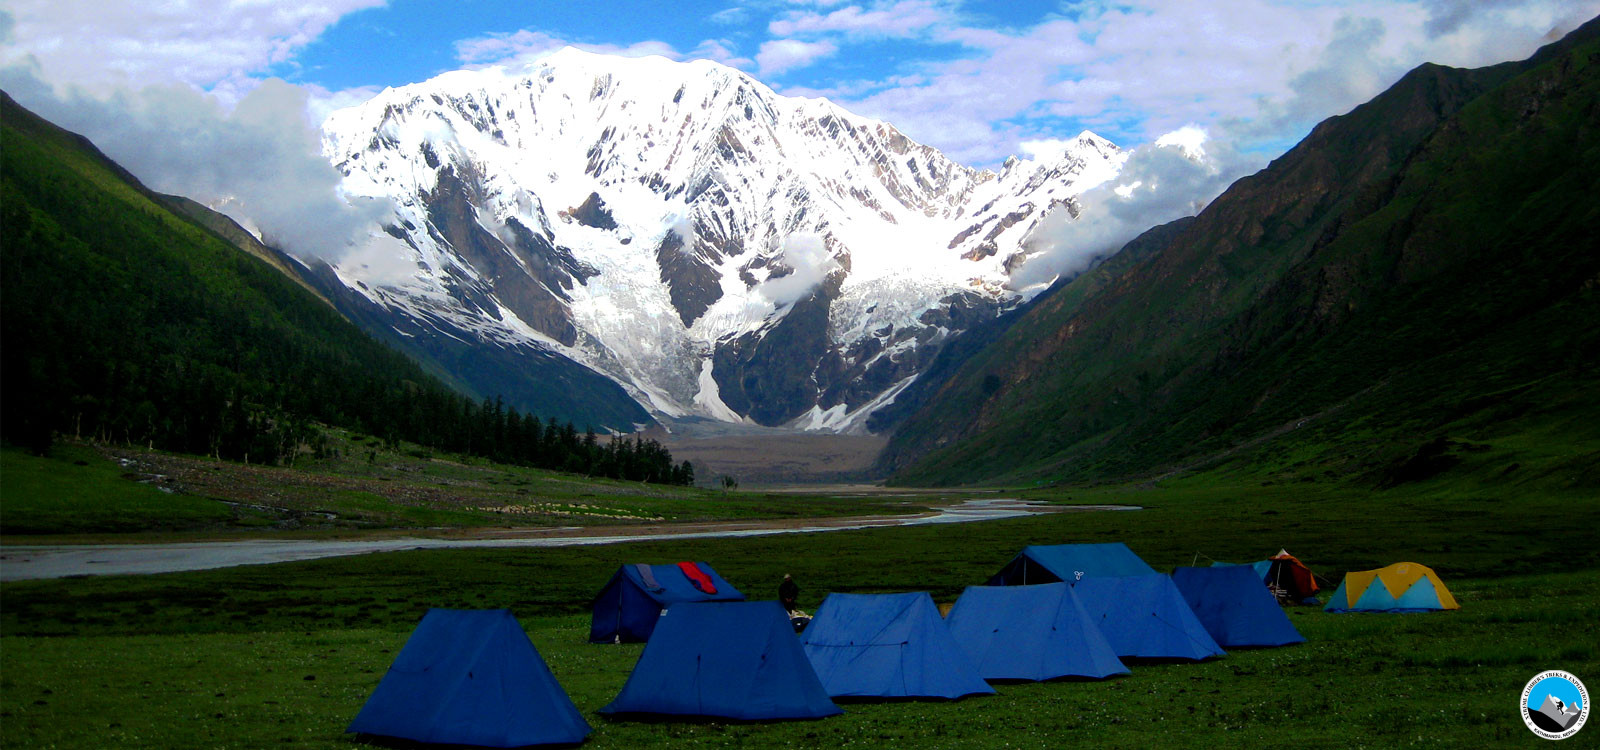 Api Saipal Himal Base Camp (West Nepal) Camping